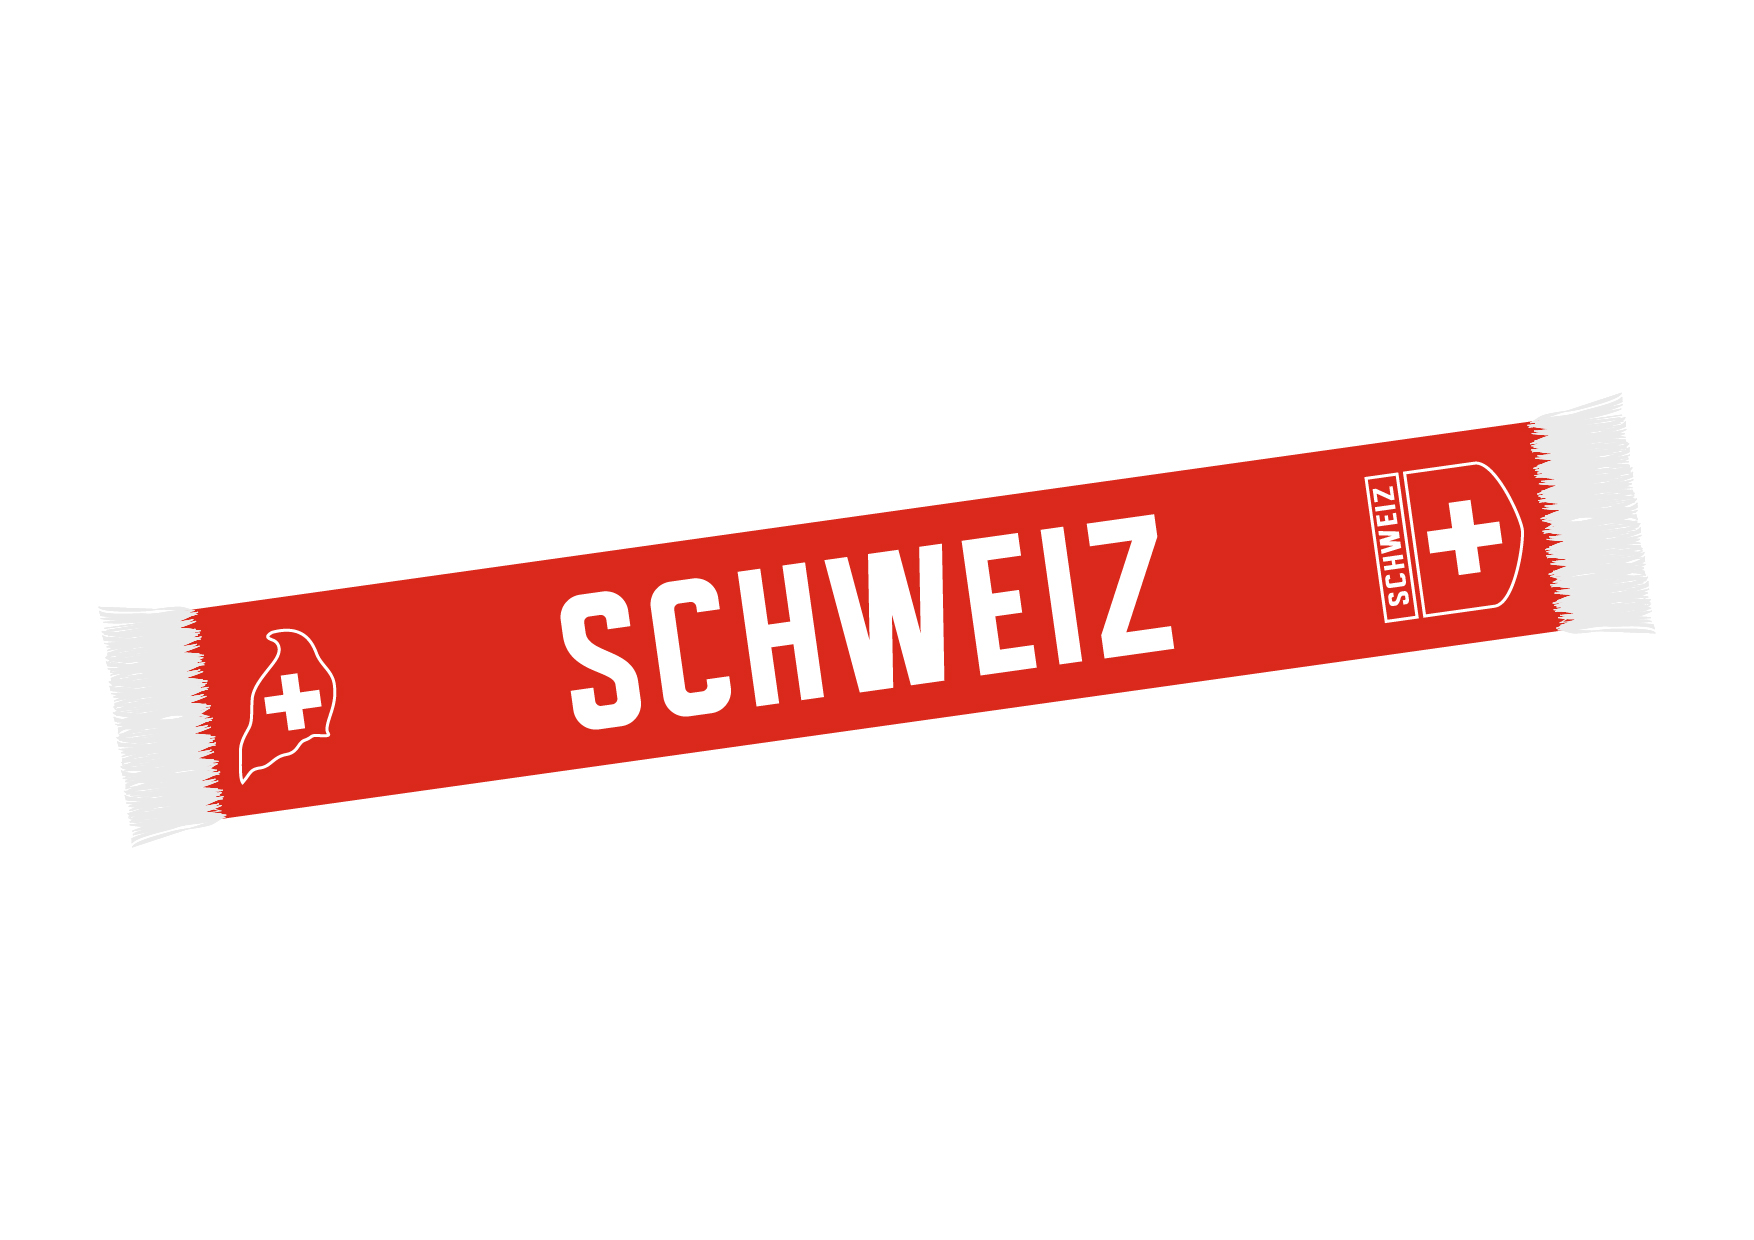 Schal Schweiz Suisse-Switzerland